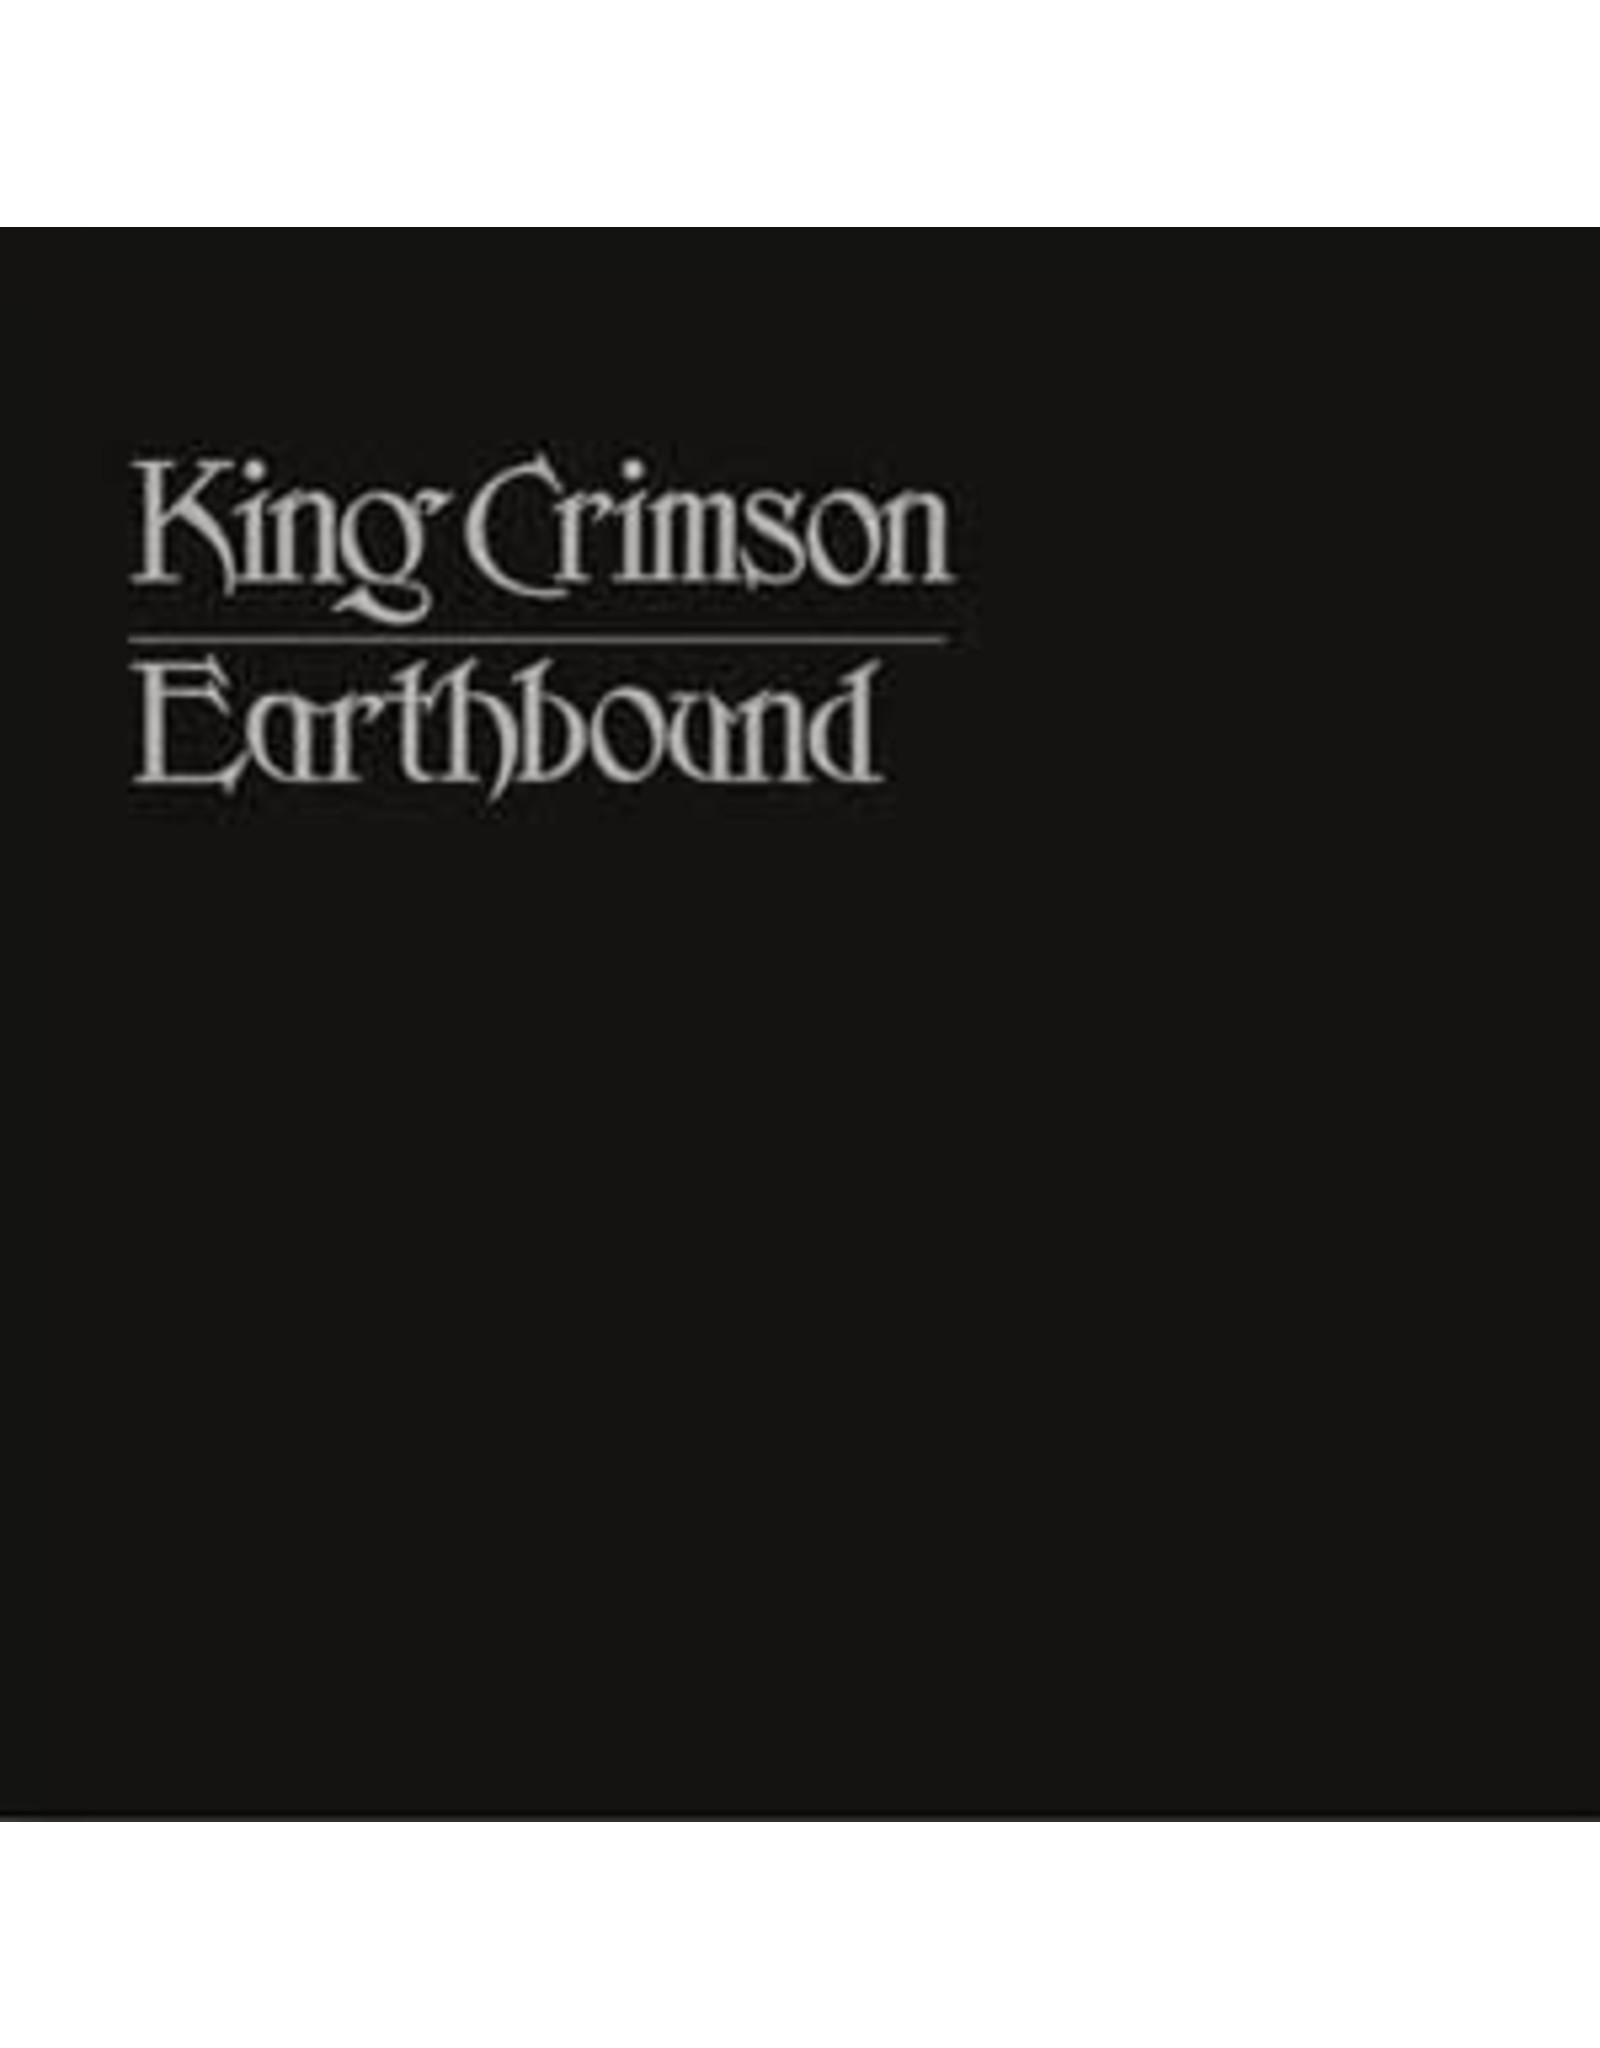 Panegyric King Crimson: Earthbound LP